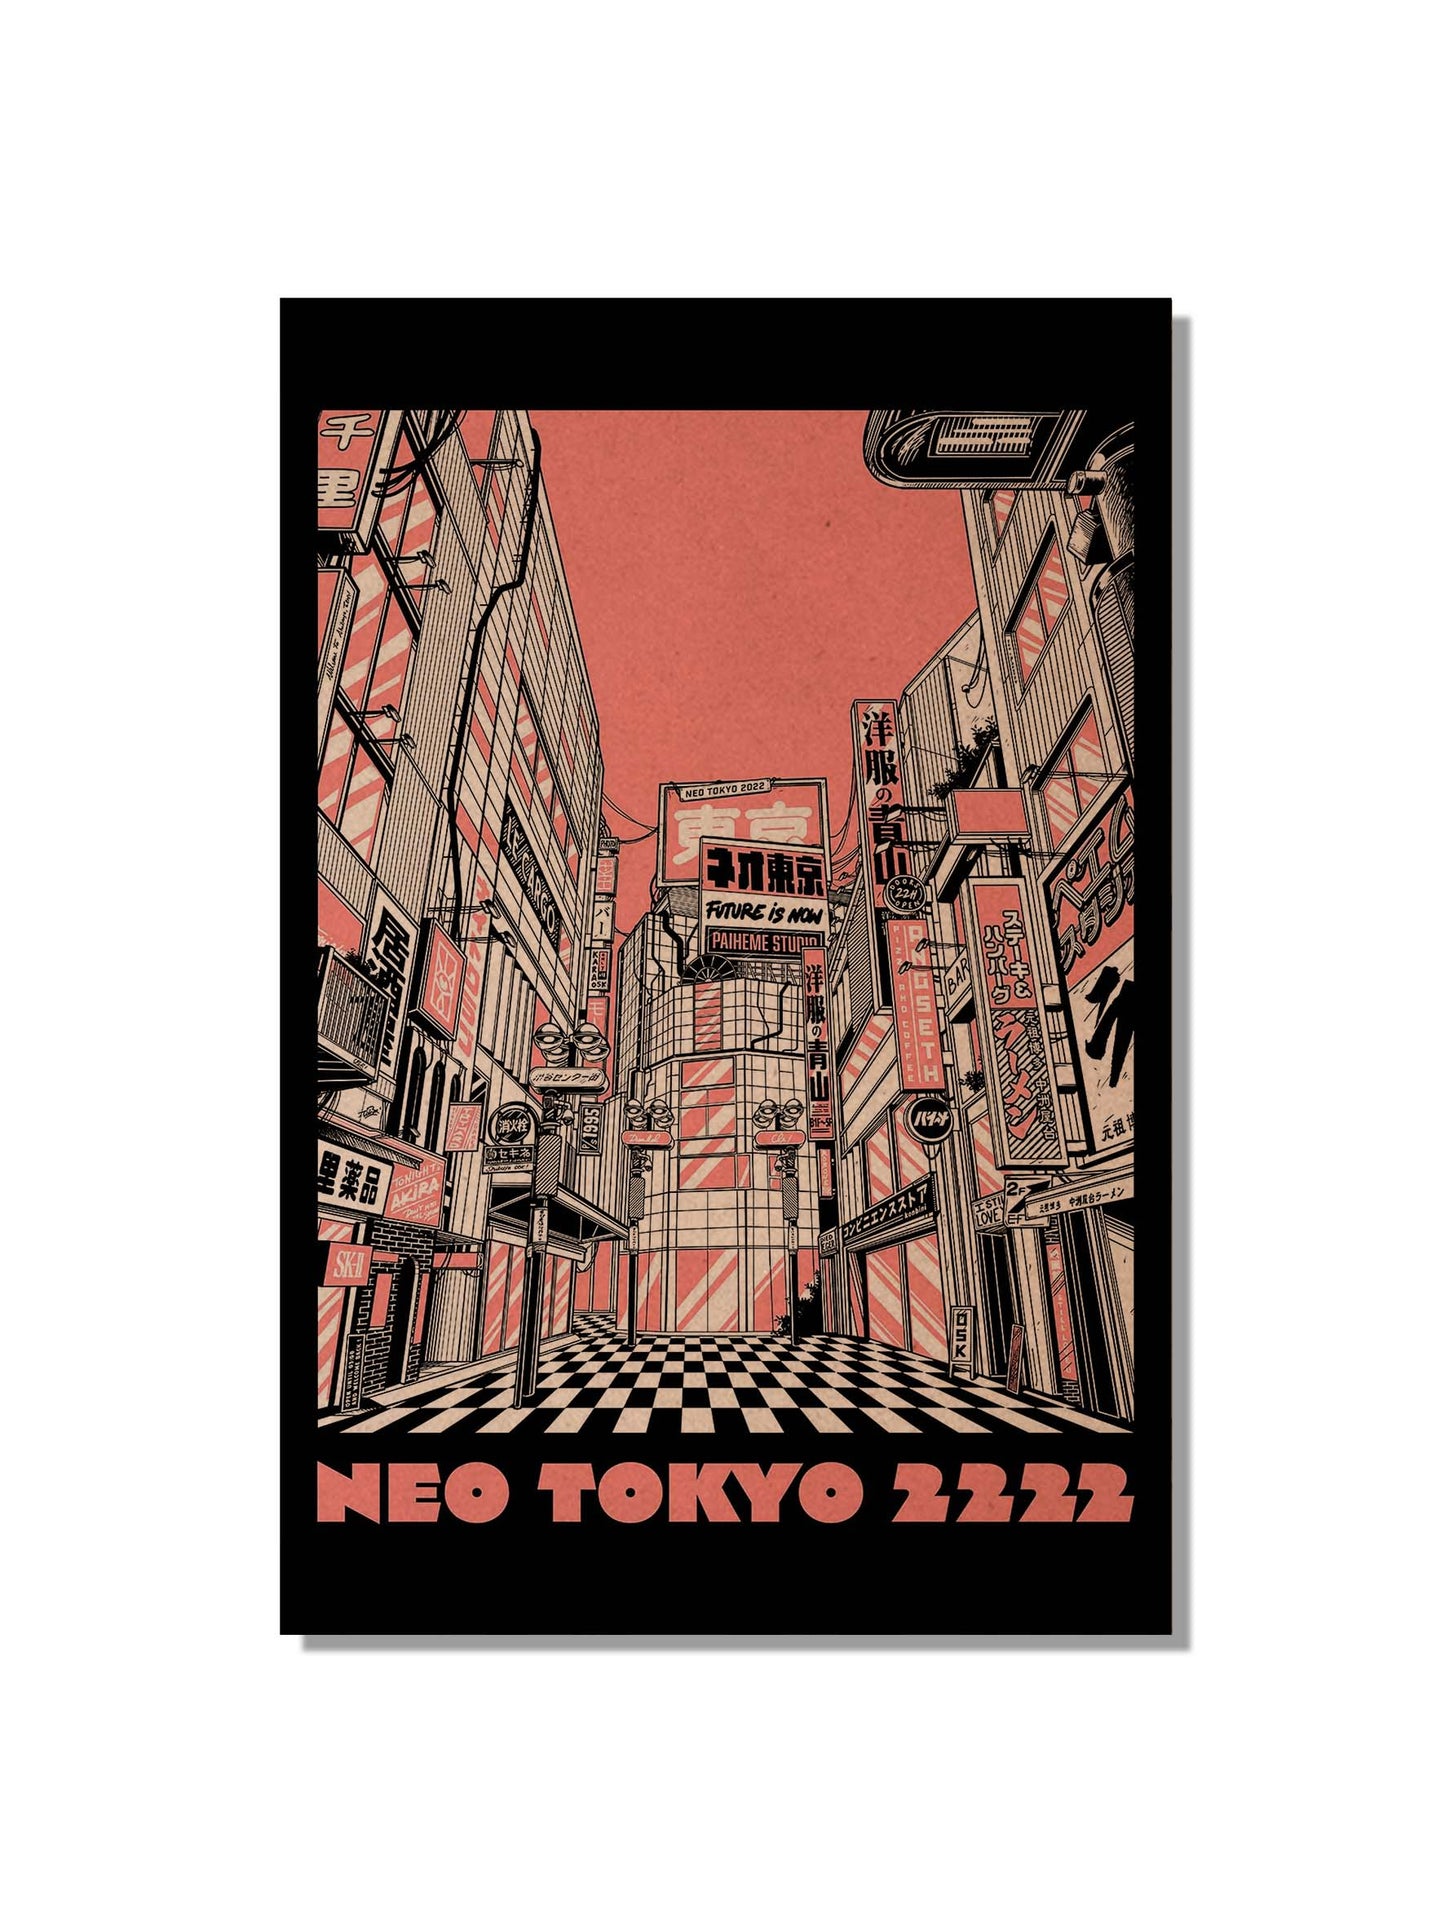 NEO TOKYO 2222 Postcard